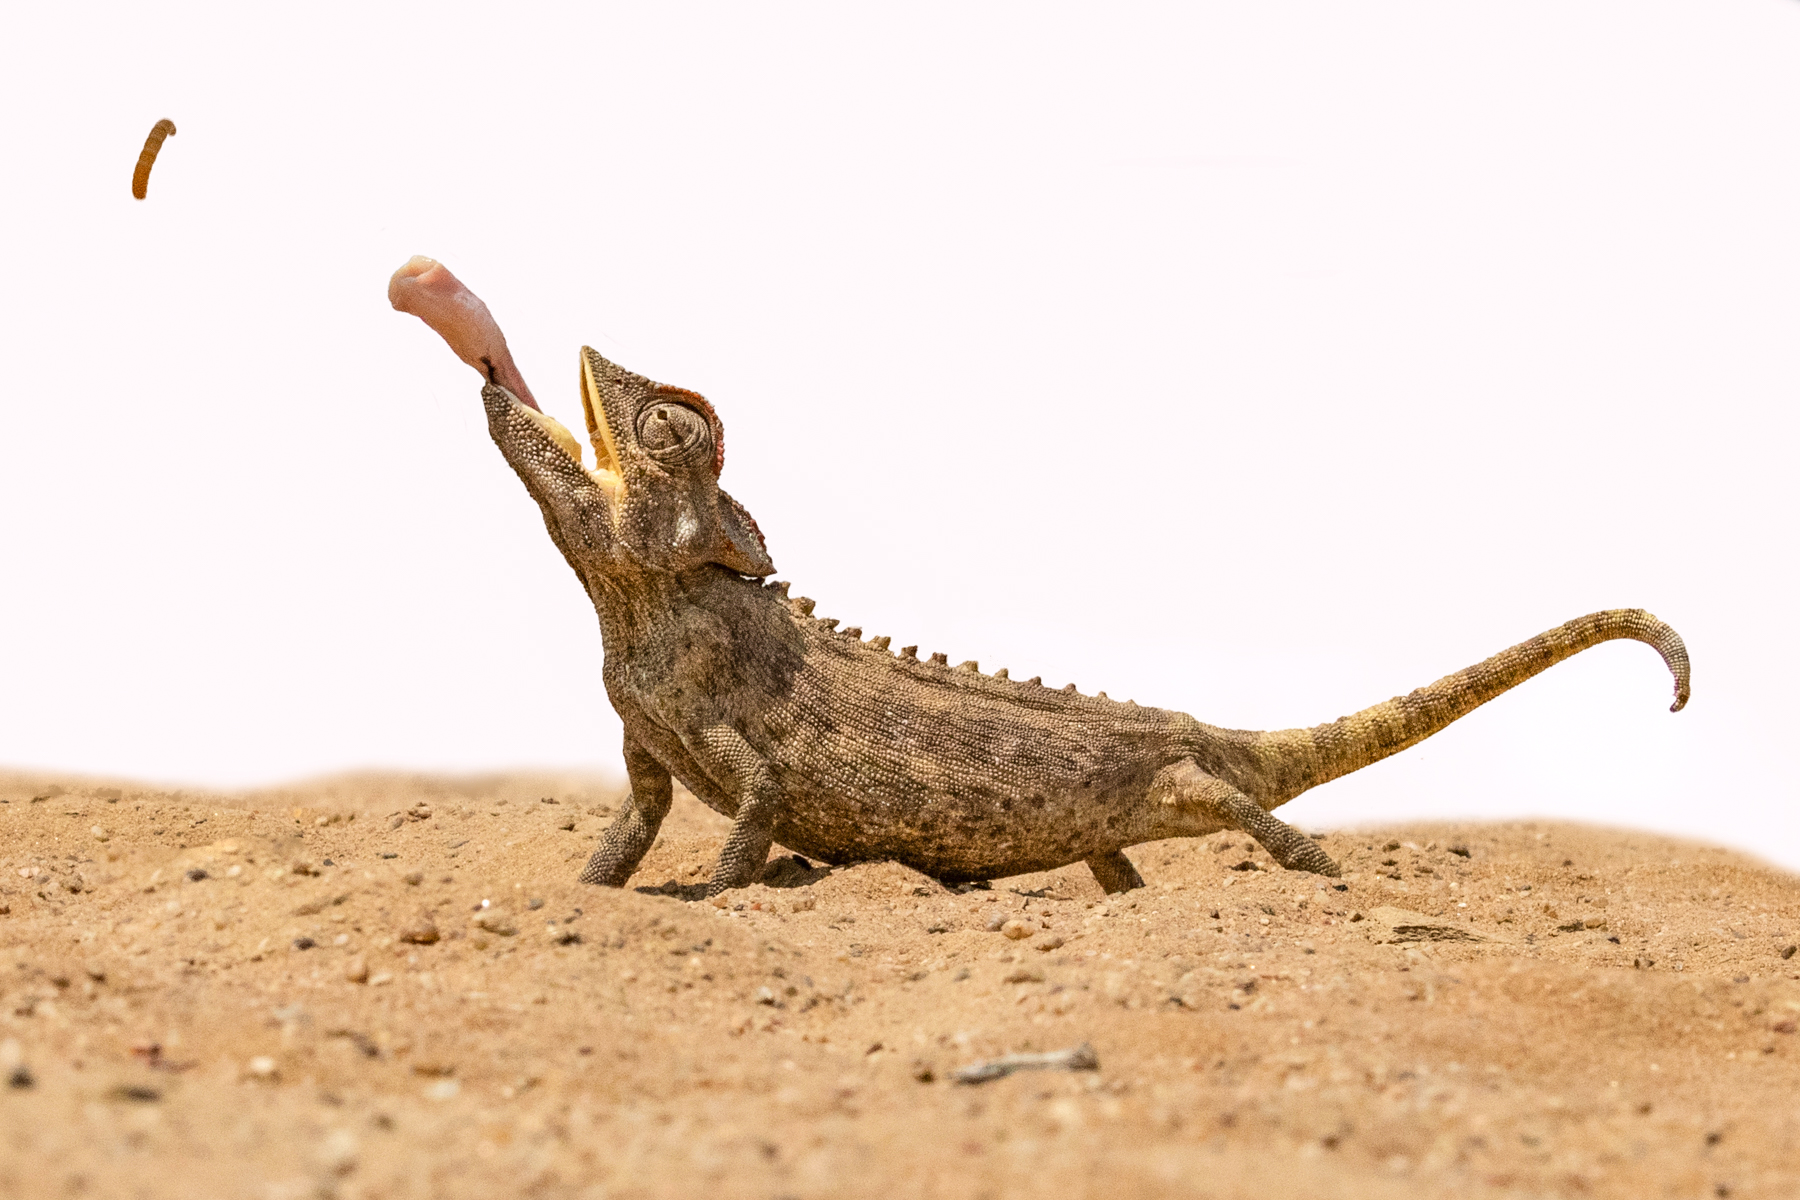 A Namaqua Chameleon catches its breakfast on our Living Desert trip, the ultimate Sandbox Safari